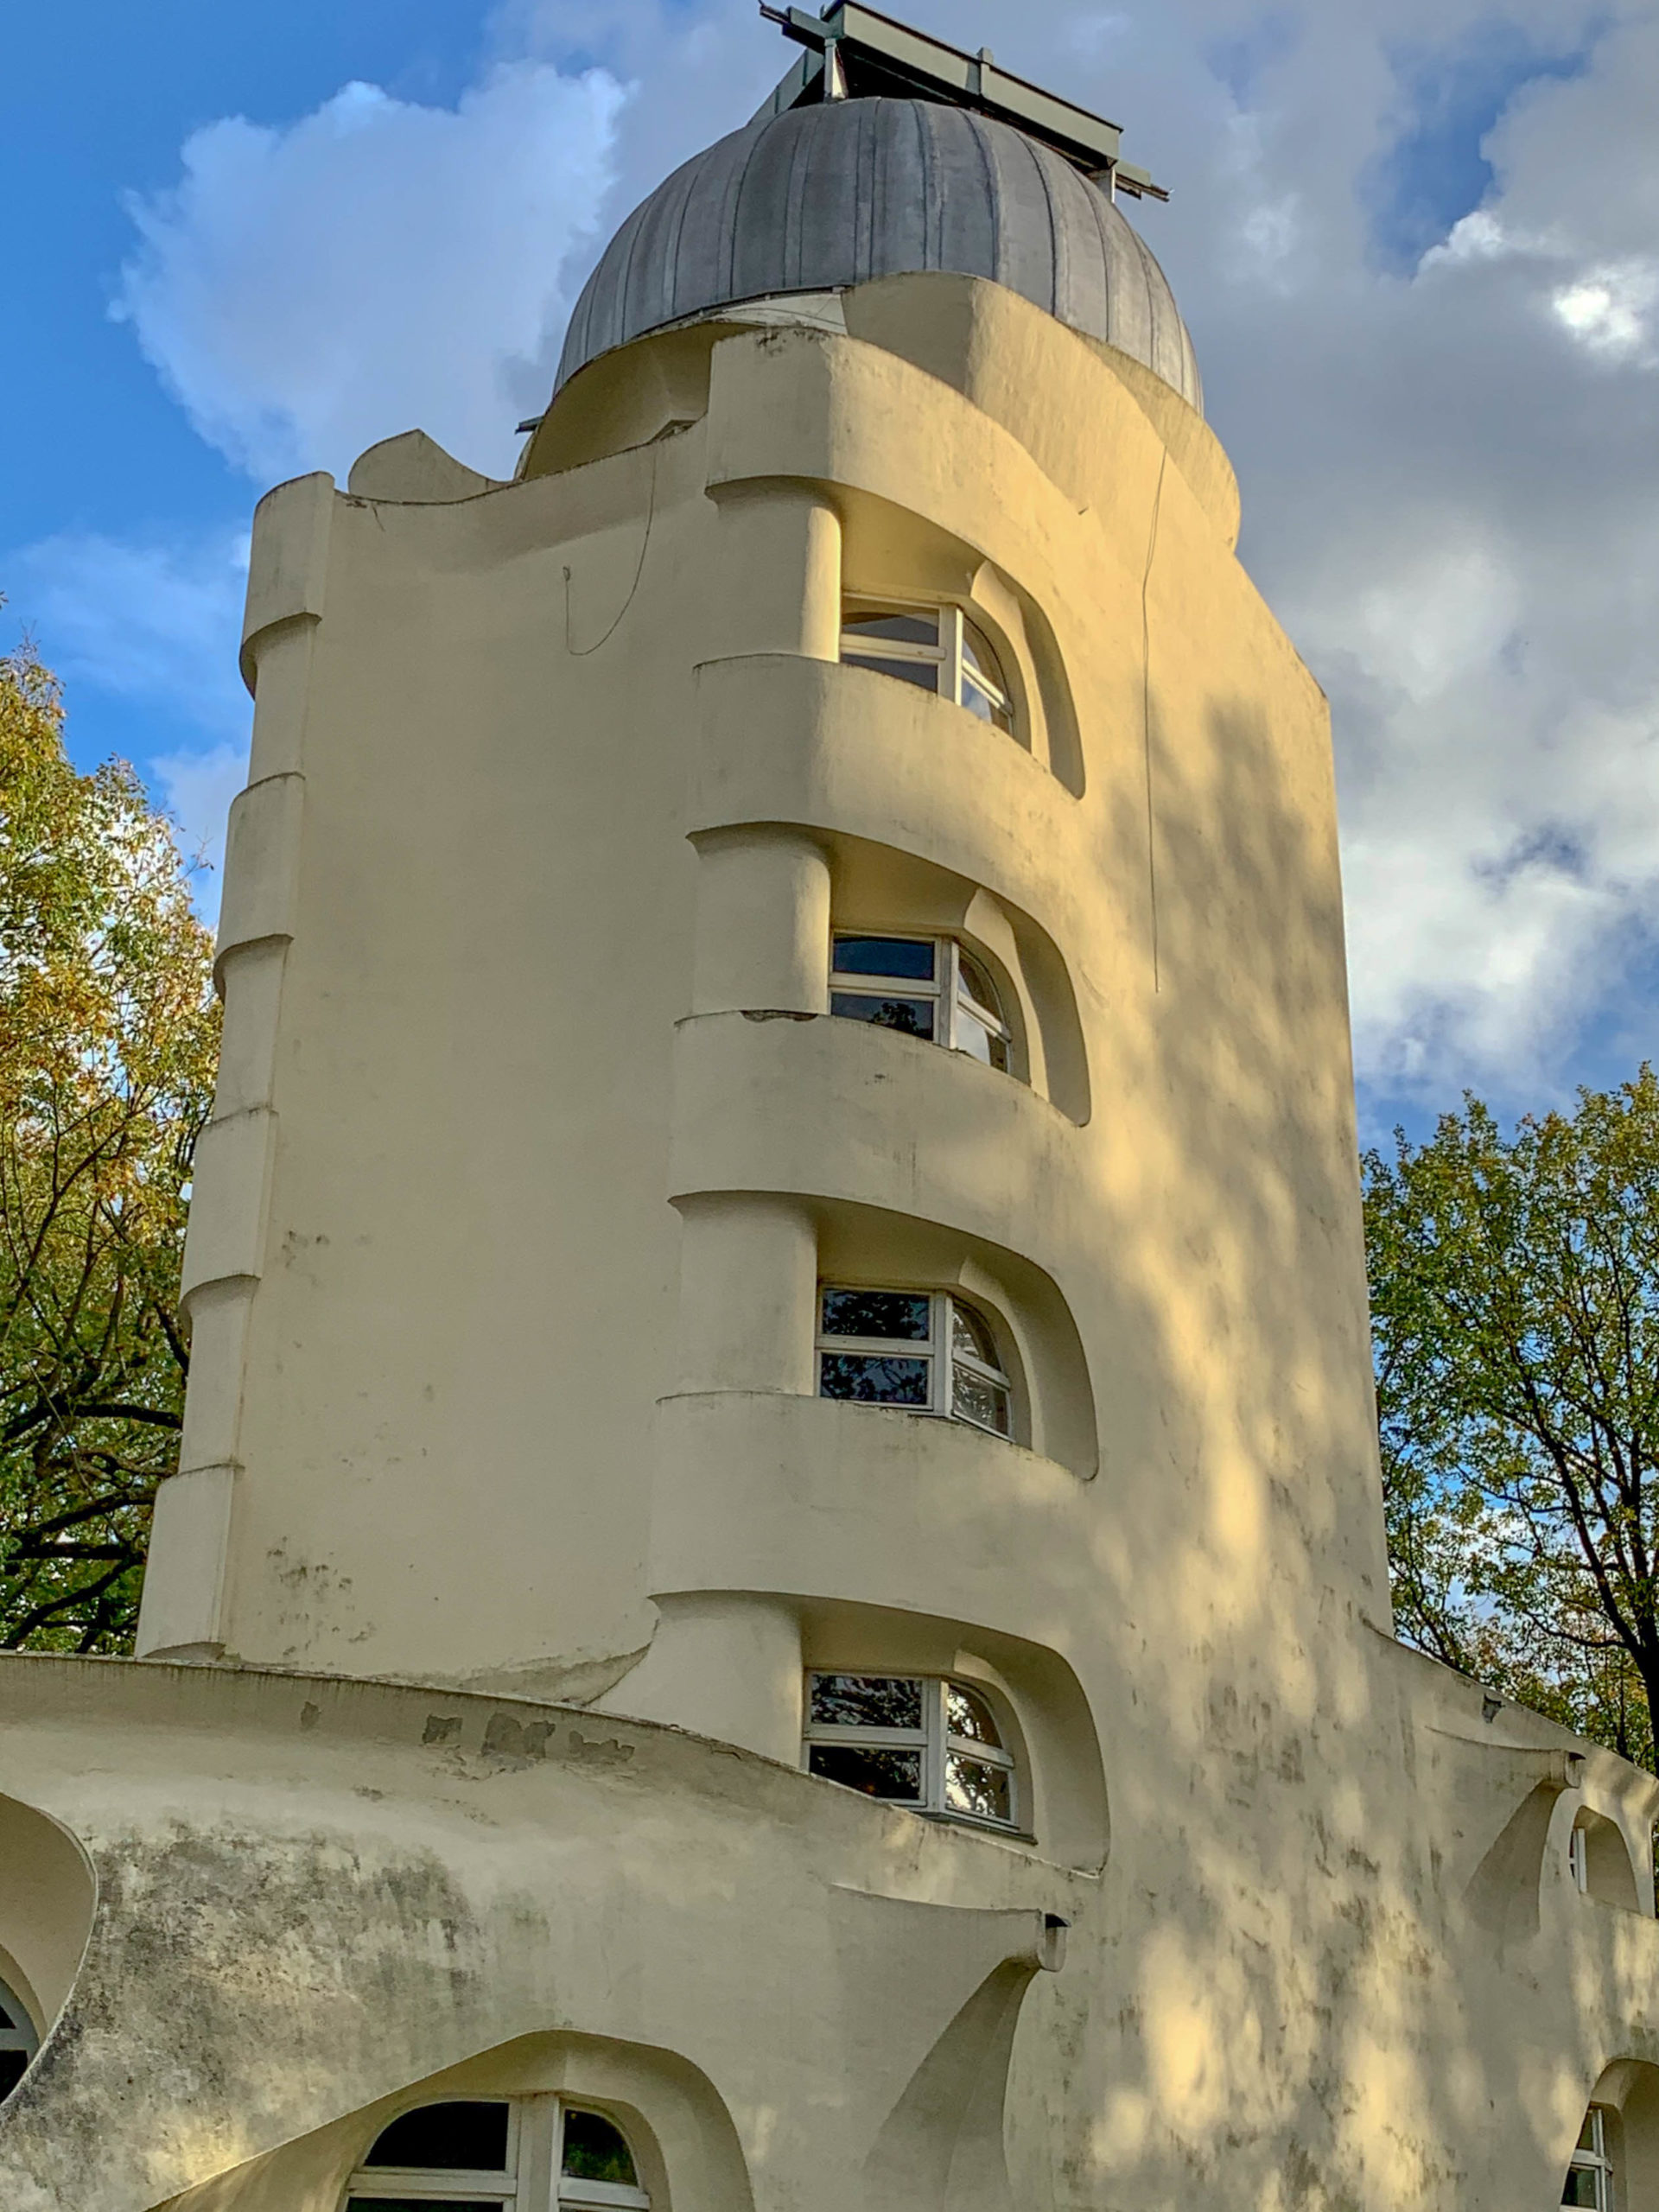 Einsteinturm, 1919-1924. Architekt: Erich Mendelsohn. Foto: Daniela Christmann